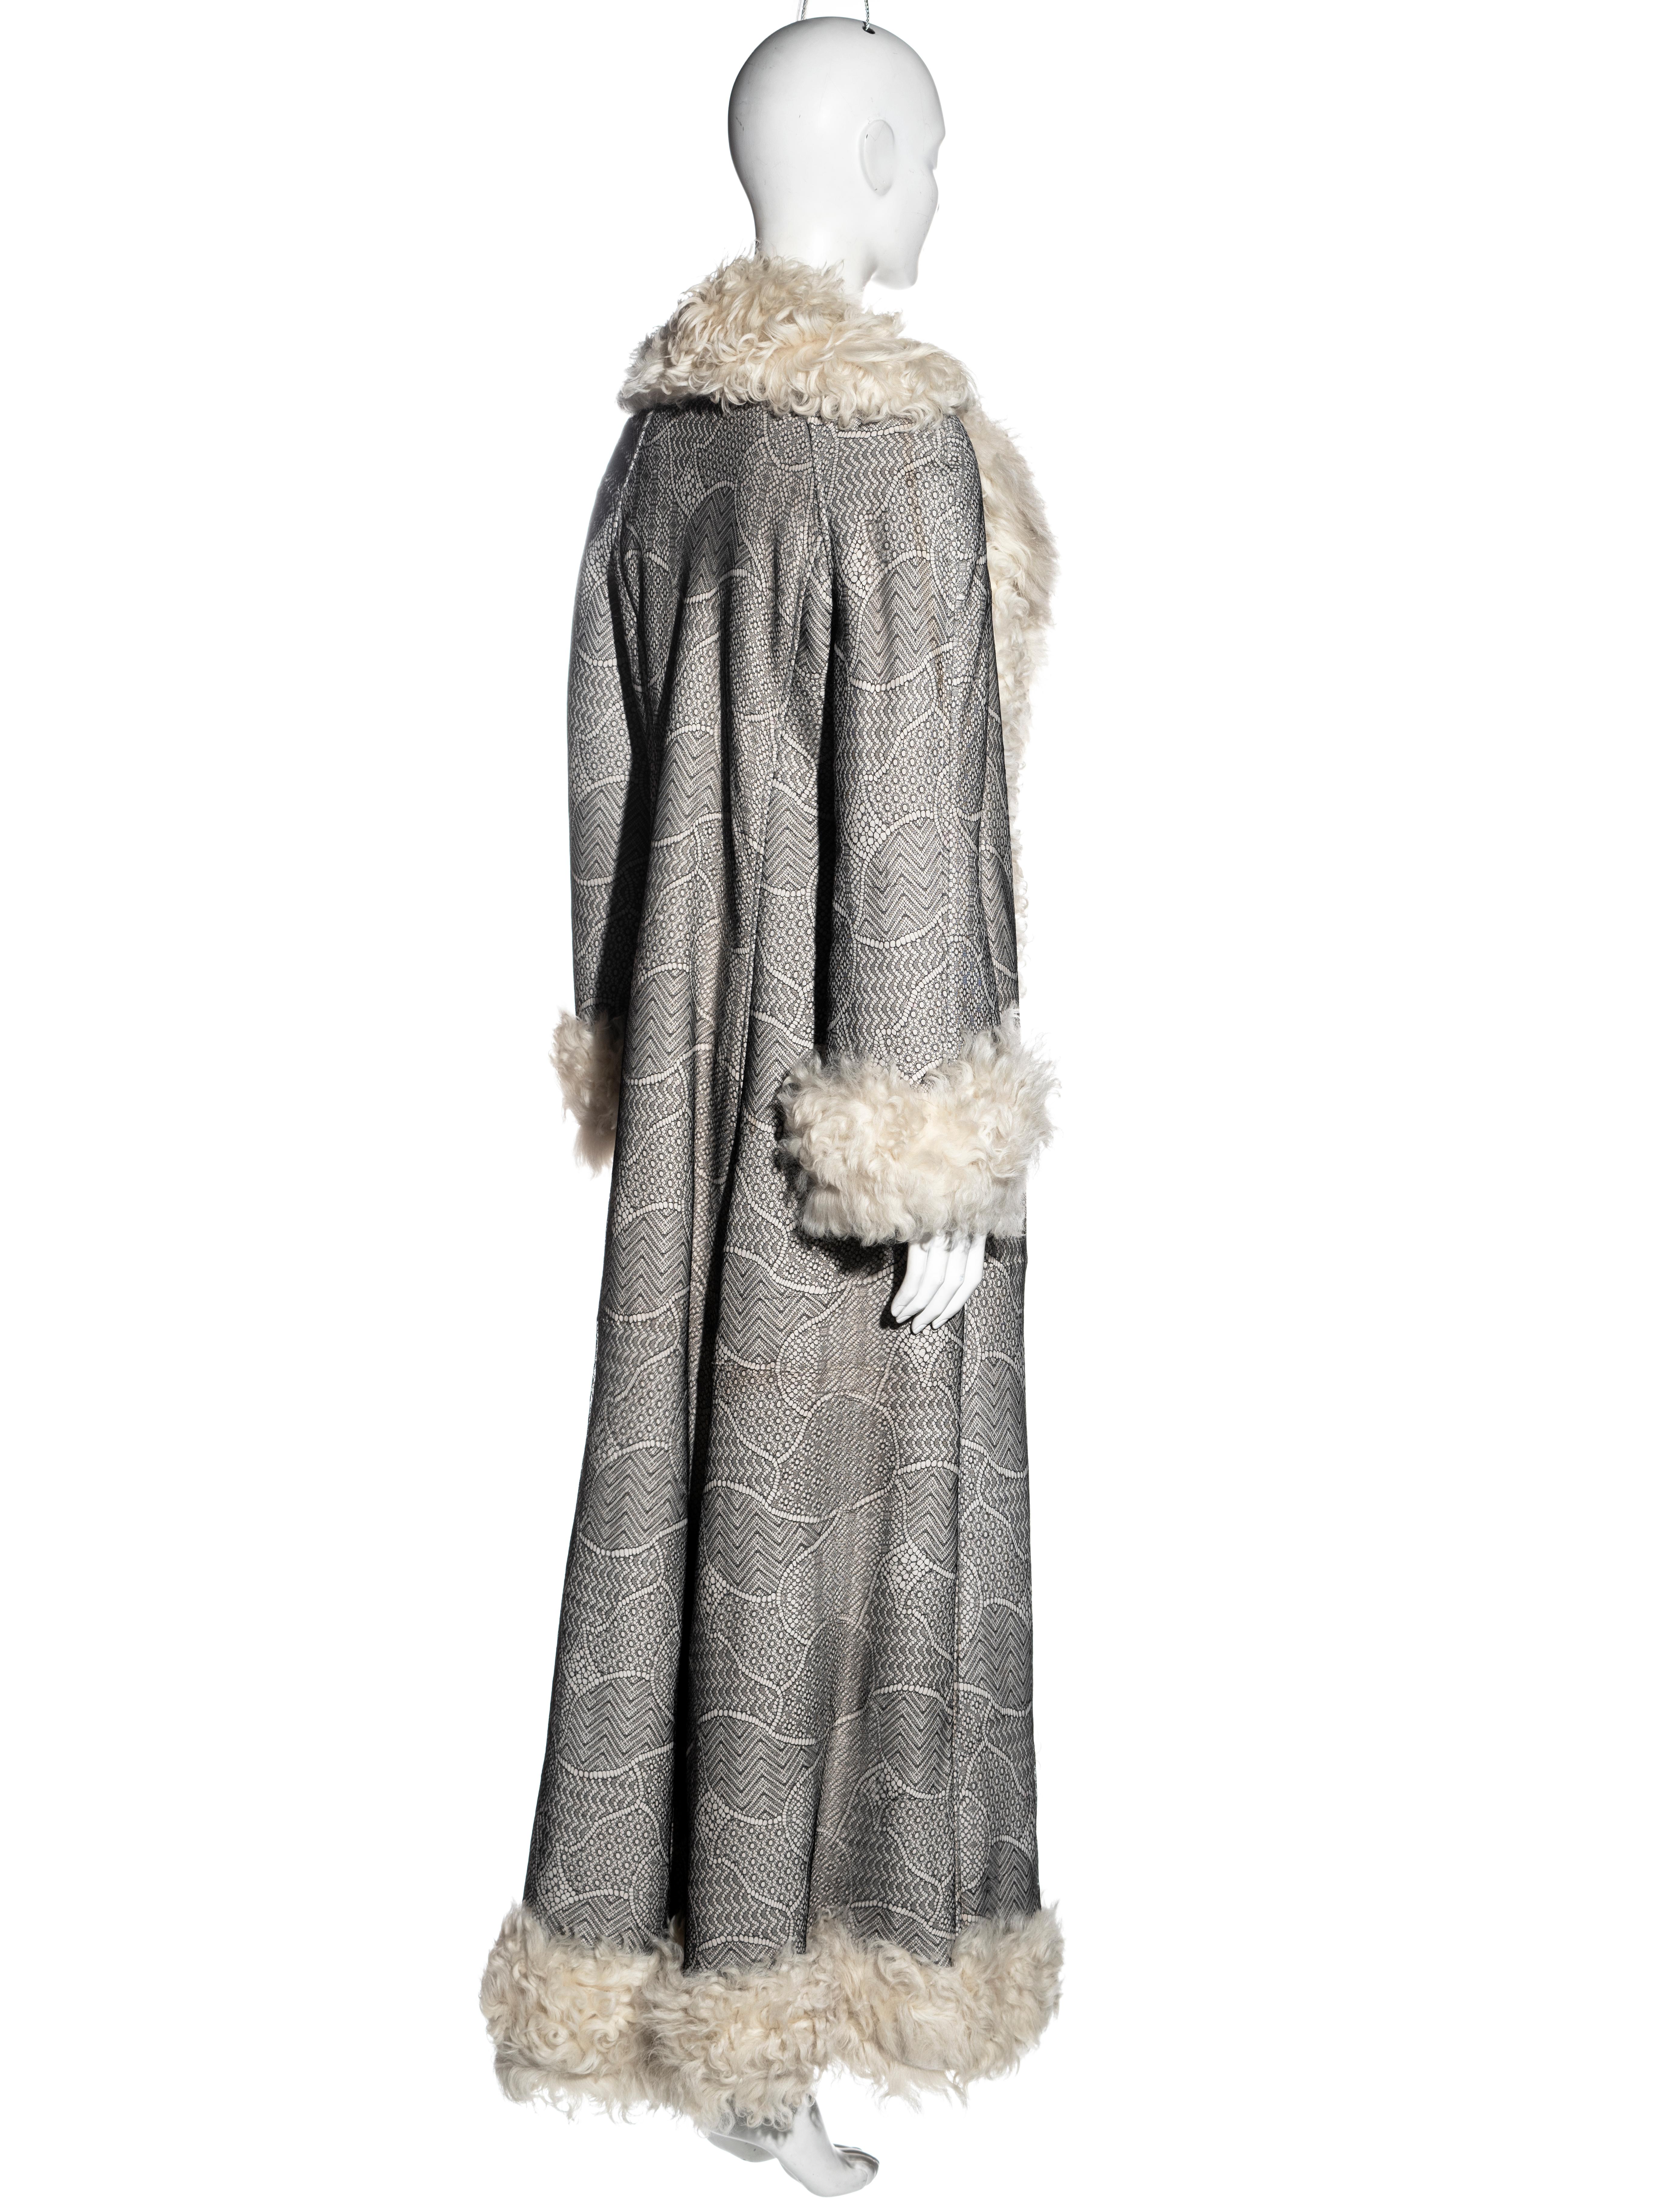 Christian Dior by John Galliano cream Persian lamb and lace coat, fw 2001 2